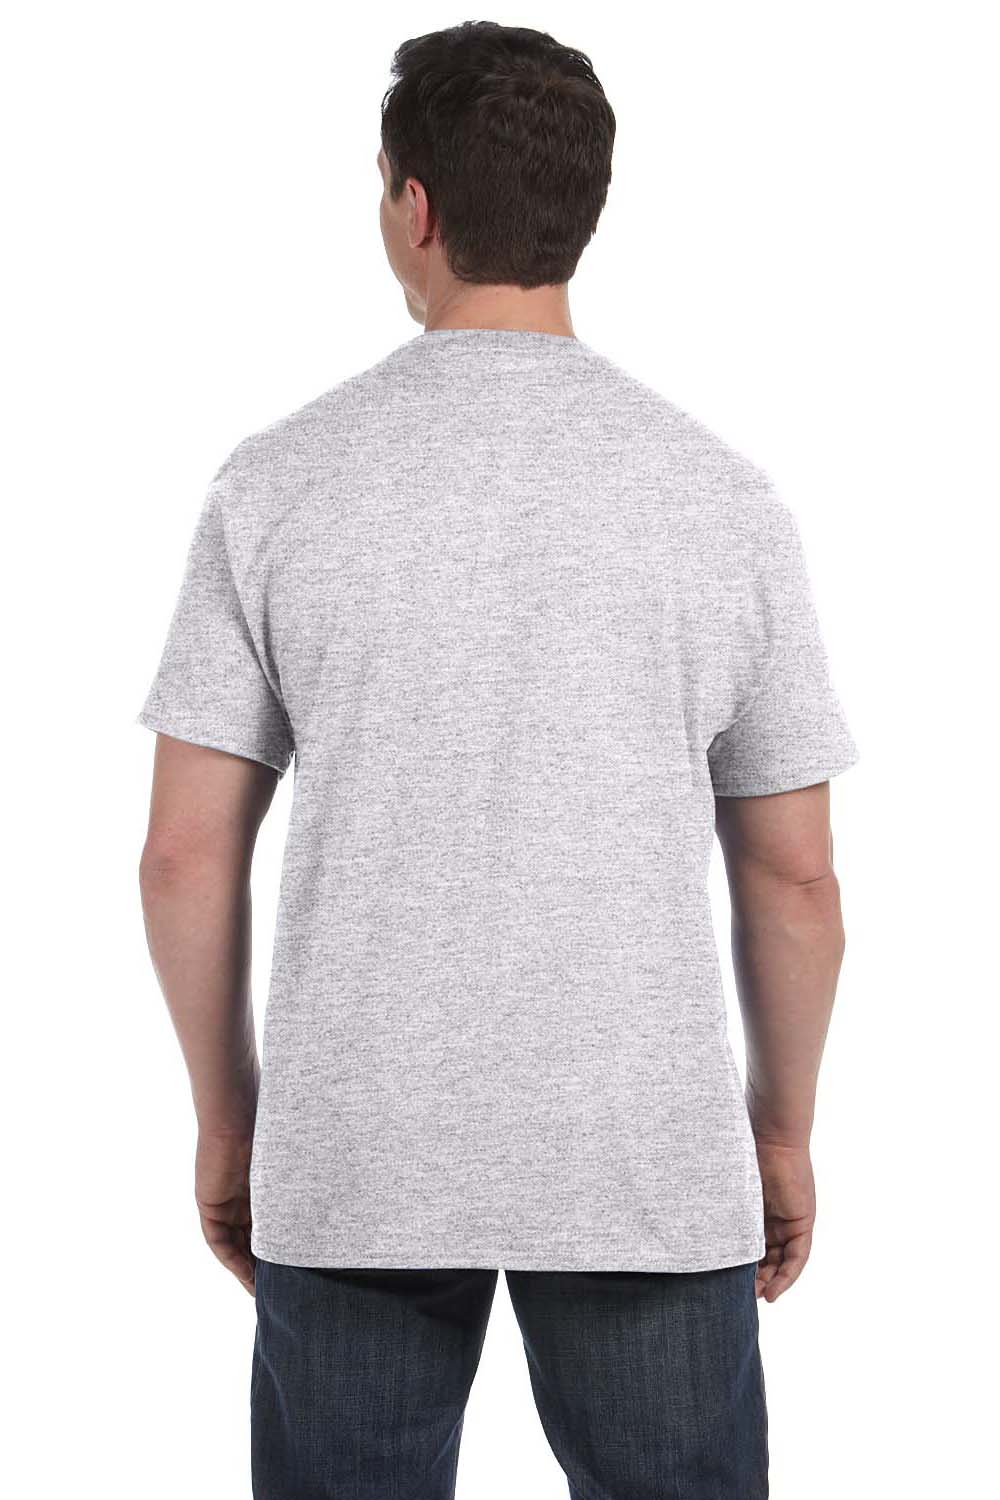 Hanes H5590 Mens ComfortSoft Short Sleeve Crewneck T-Shirt w/ Pocket Ash Grey Back